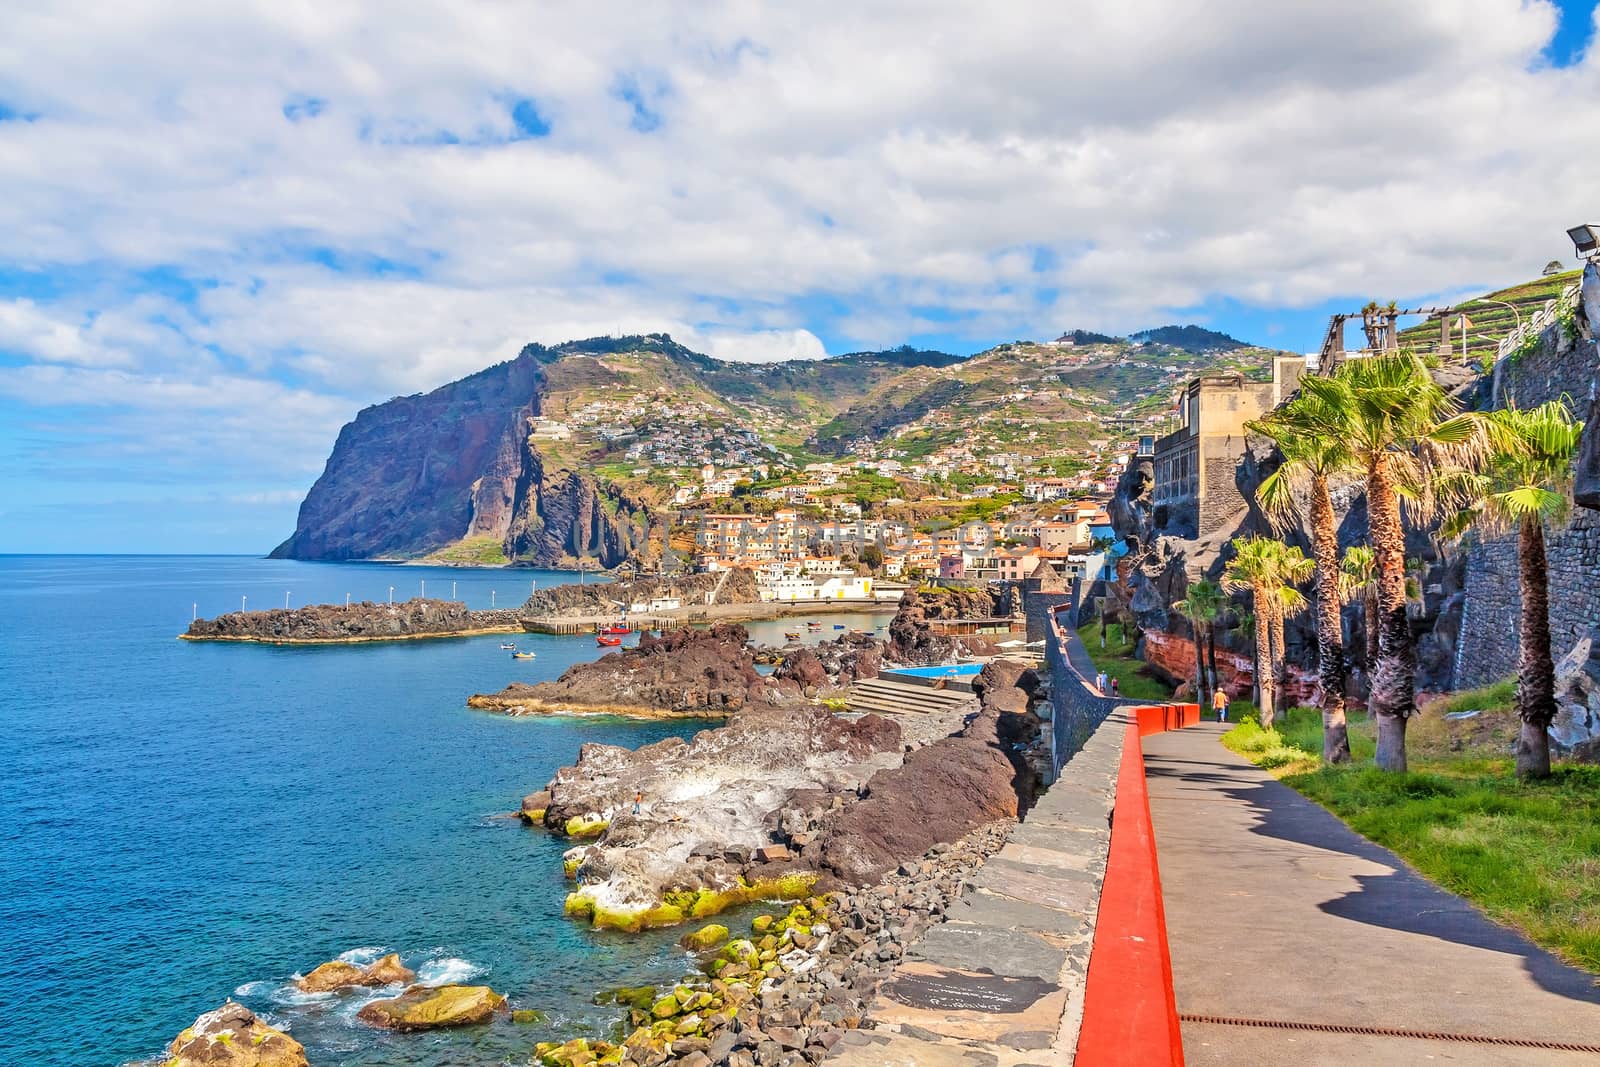 Cabo Girao / harbor Camara de Lobos, Madeira by aldorado